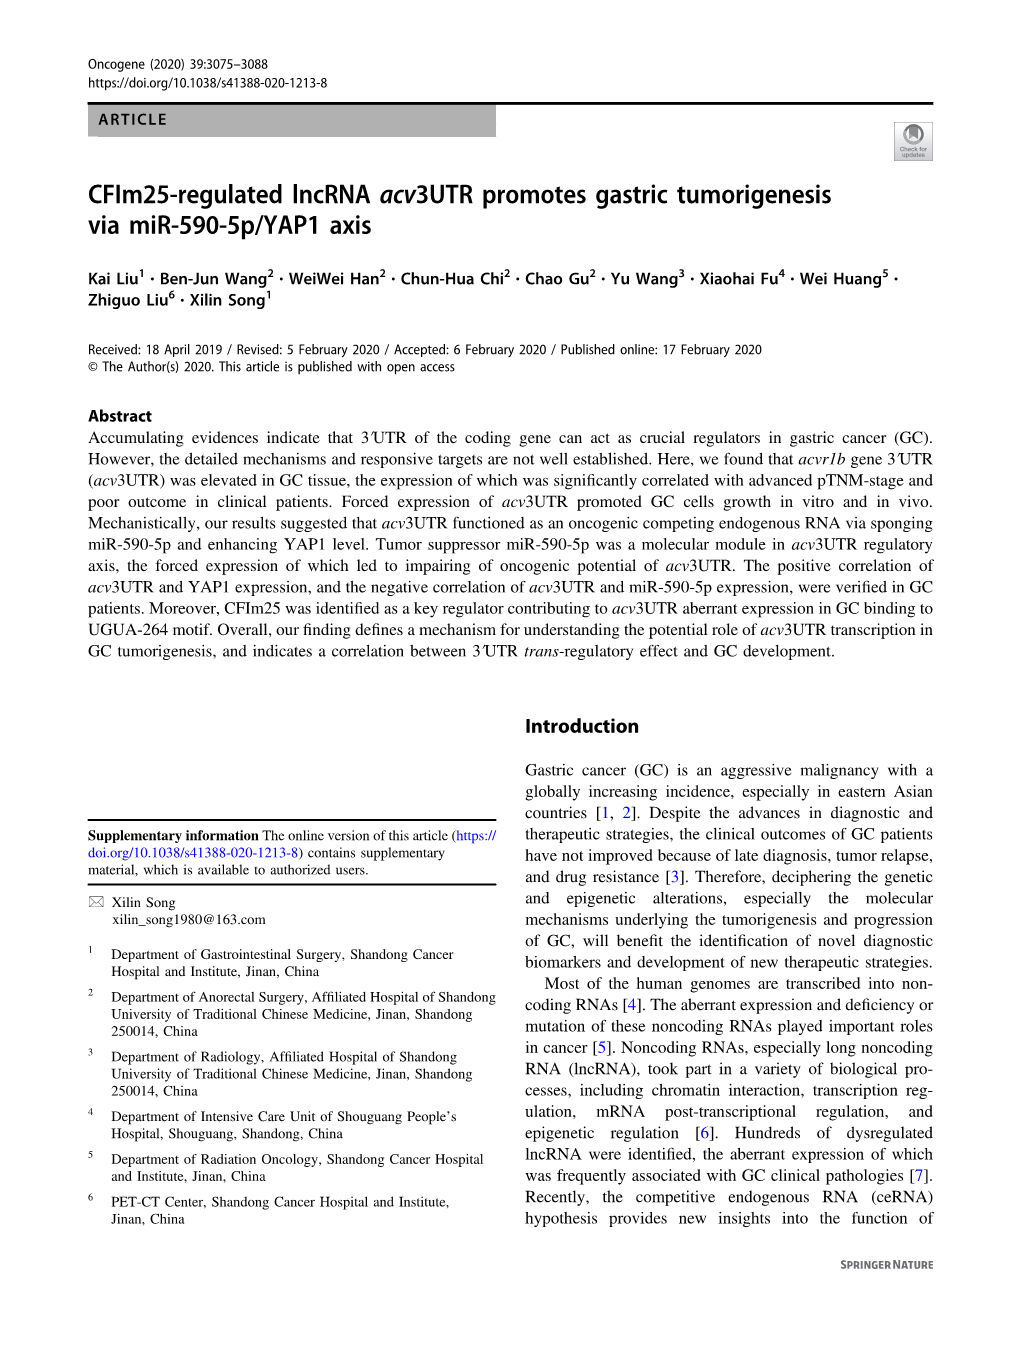 Cfim25-Regulated Lncrna Acv3utr Promotes Gastric Tumorigenesis Via Mir-590-5P/YAP1 Axis